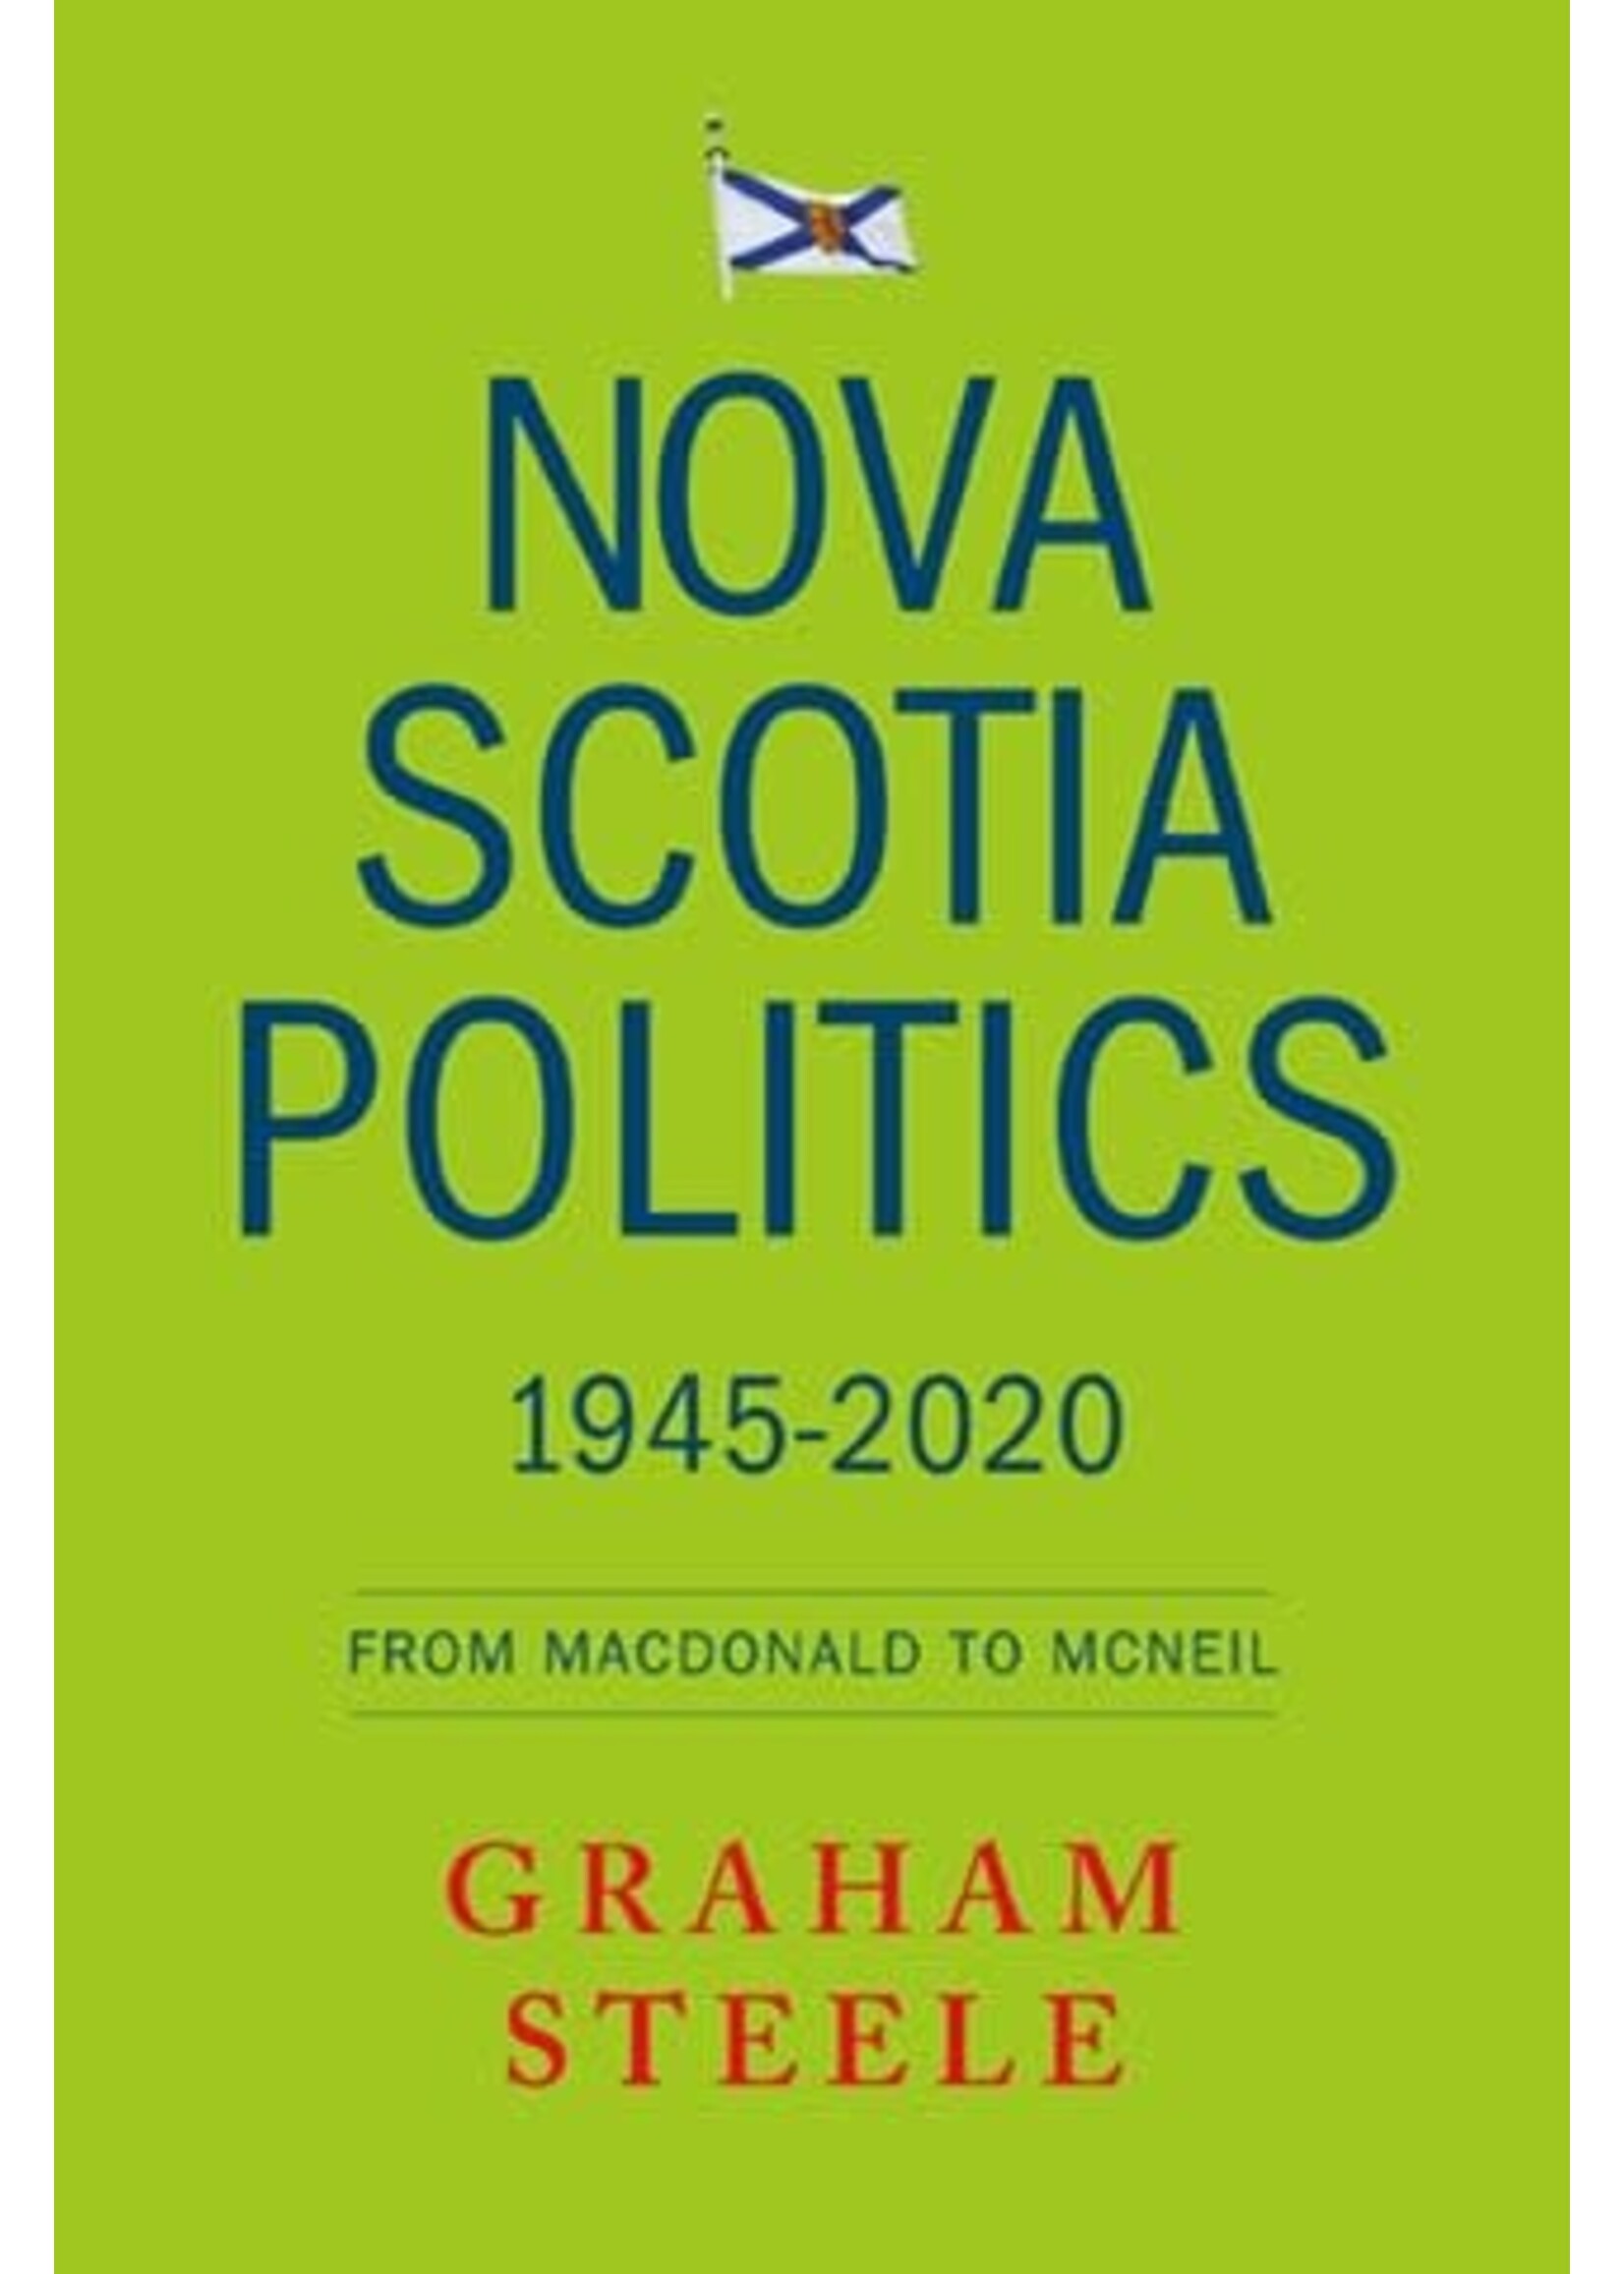 Nova Scotia Politics 1945-2020: From Macdonald to MacNeil by Graham Steele